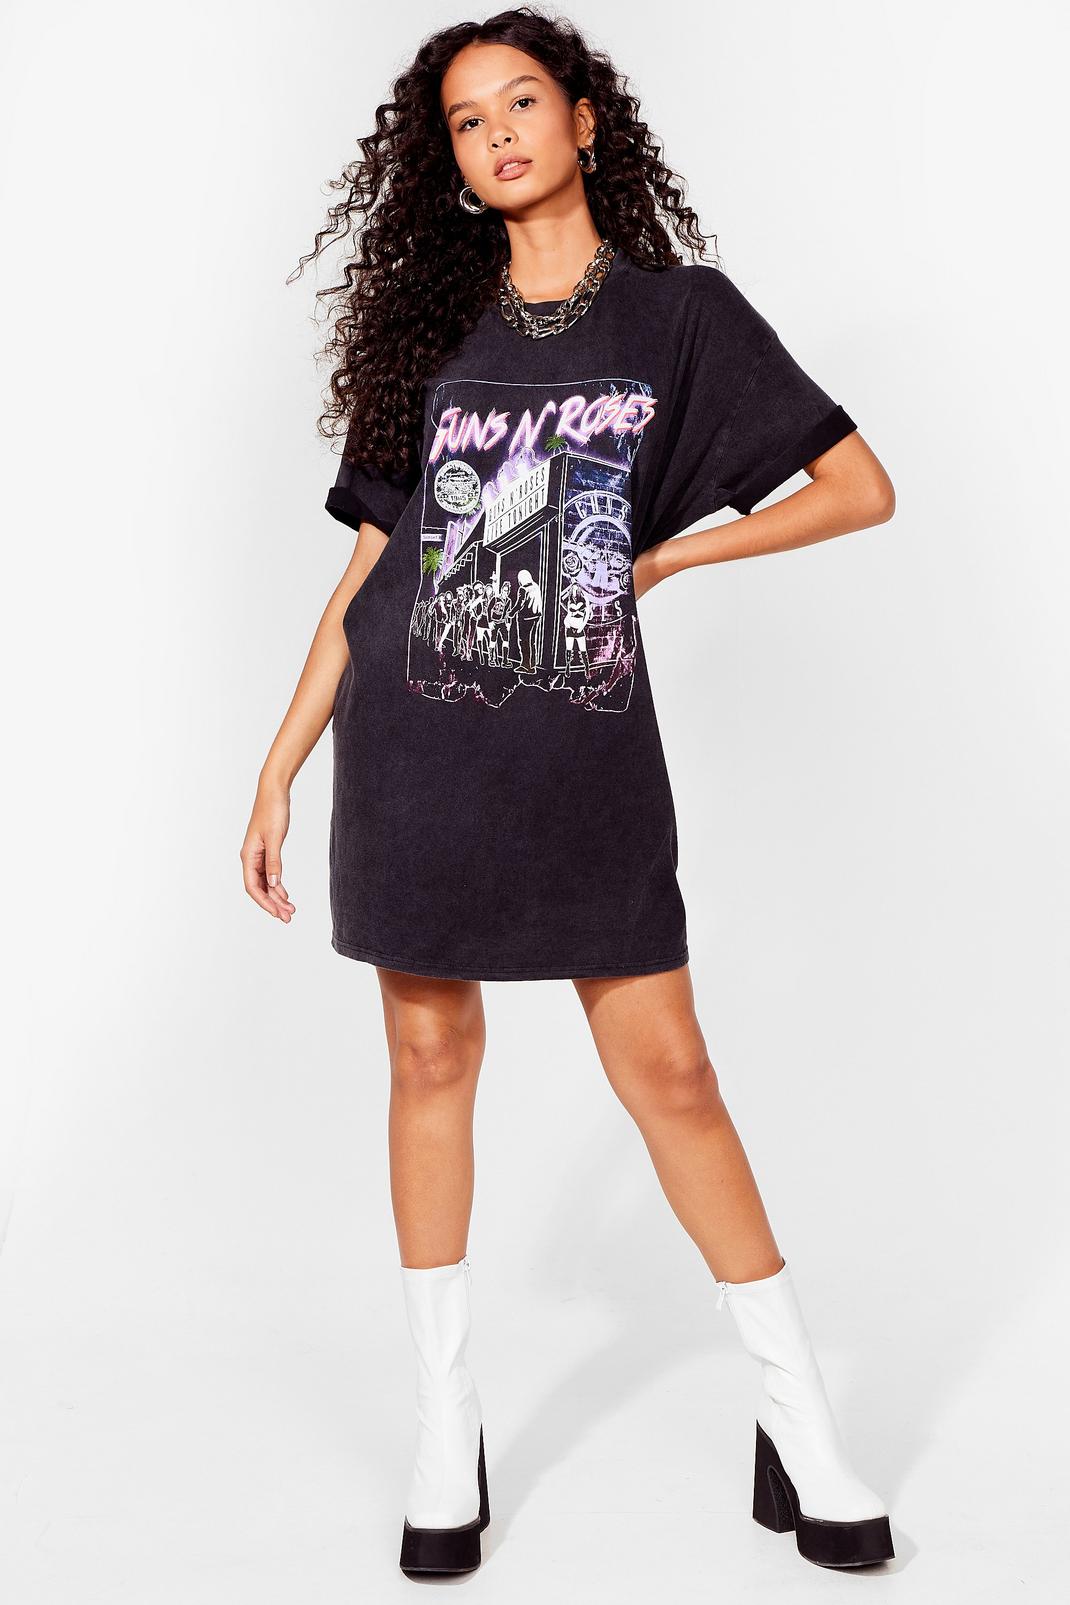 Black Guns N Roses Graphic Band T-Shirt Dress image number 1